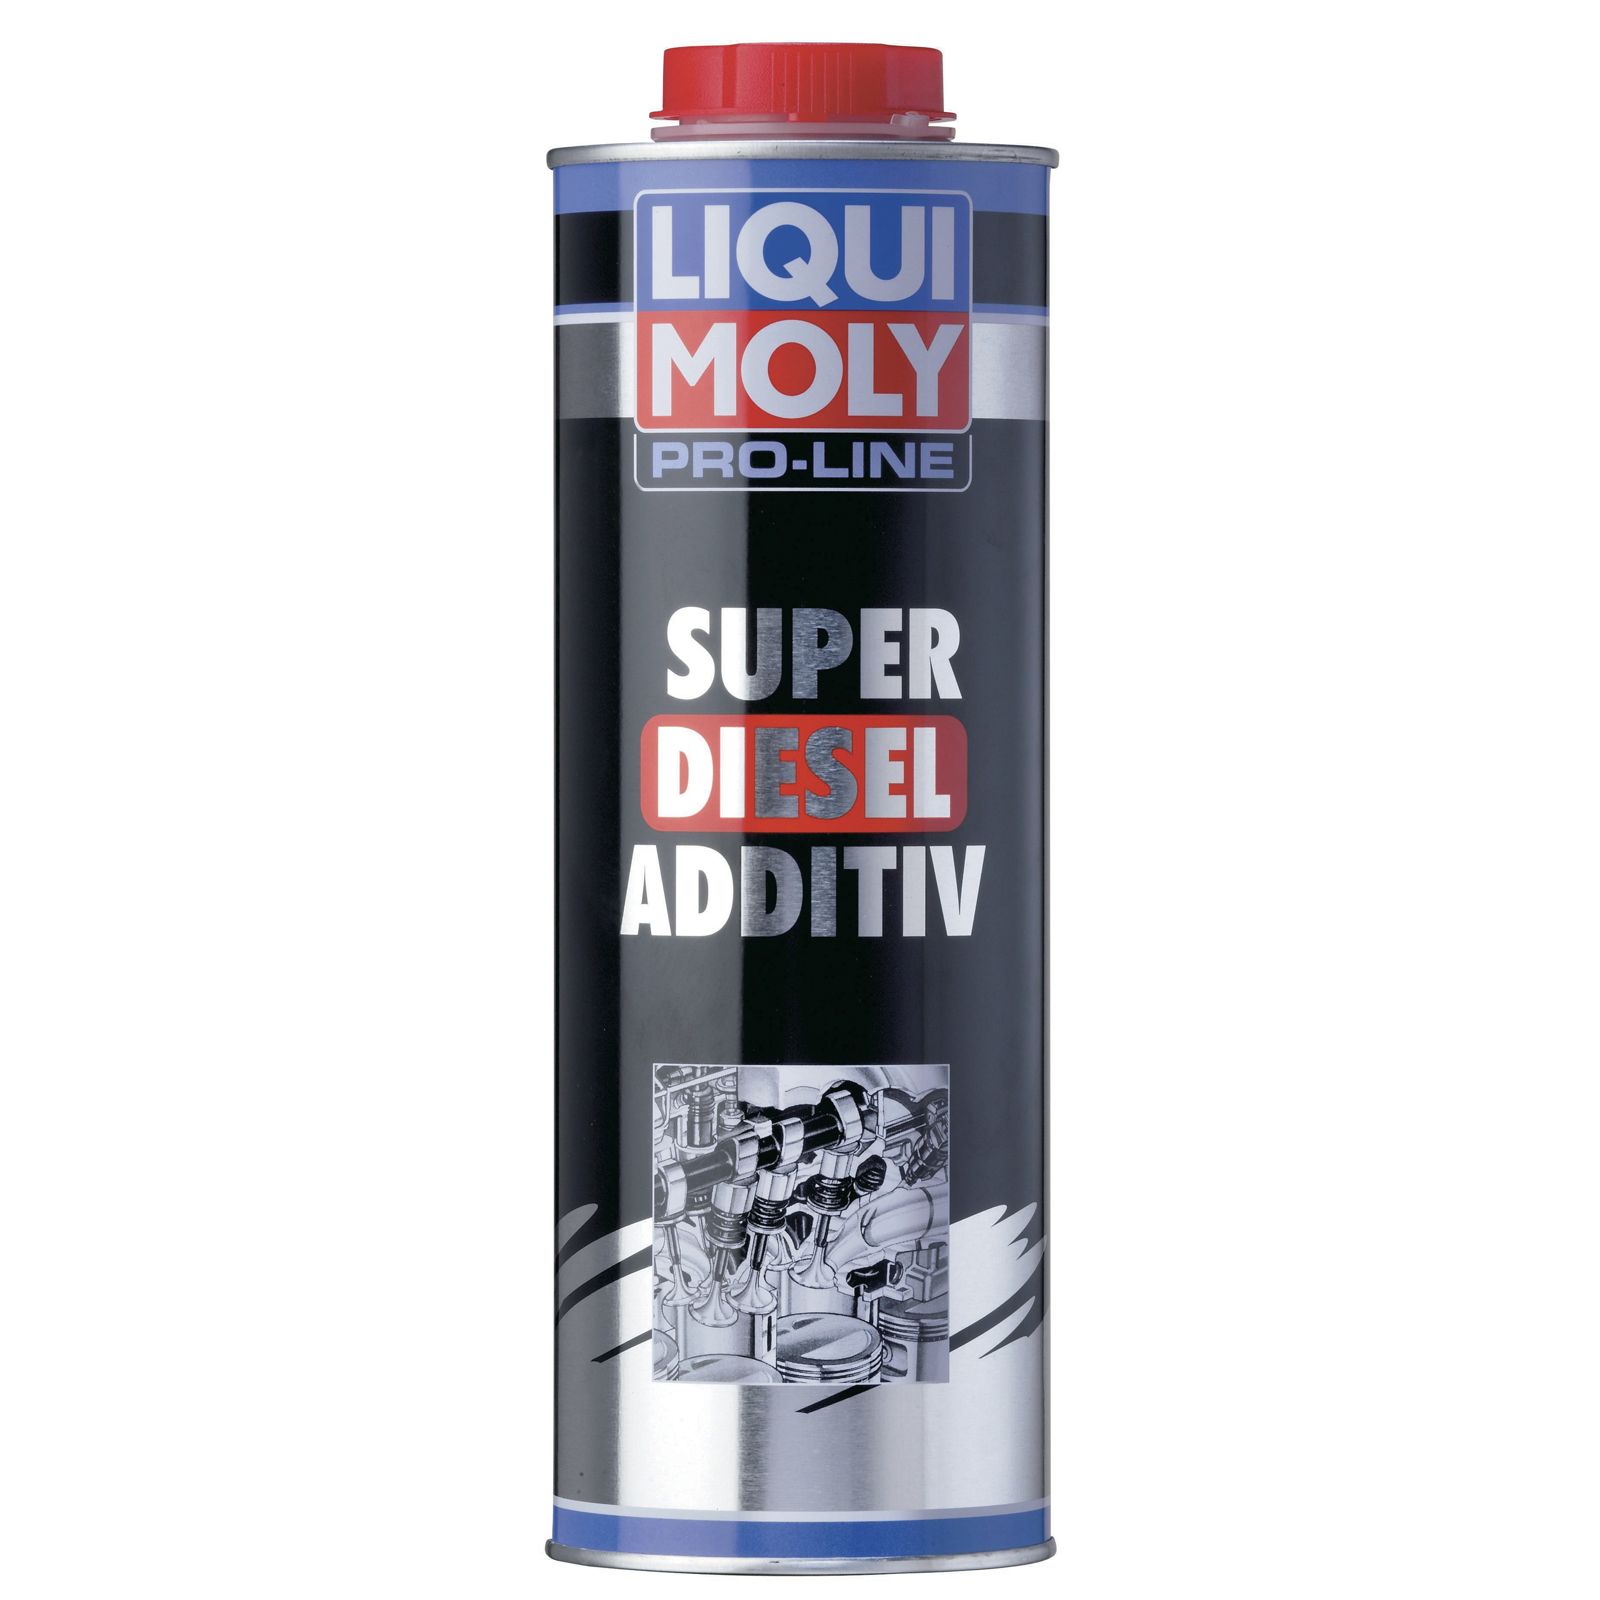 Liqui Moly Pro-Line Super Diesel Additiv 1l